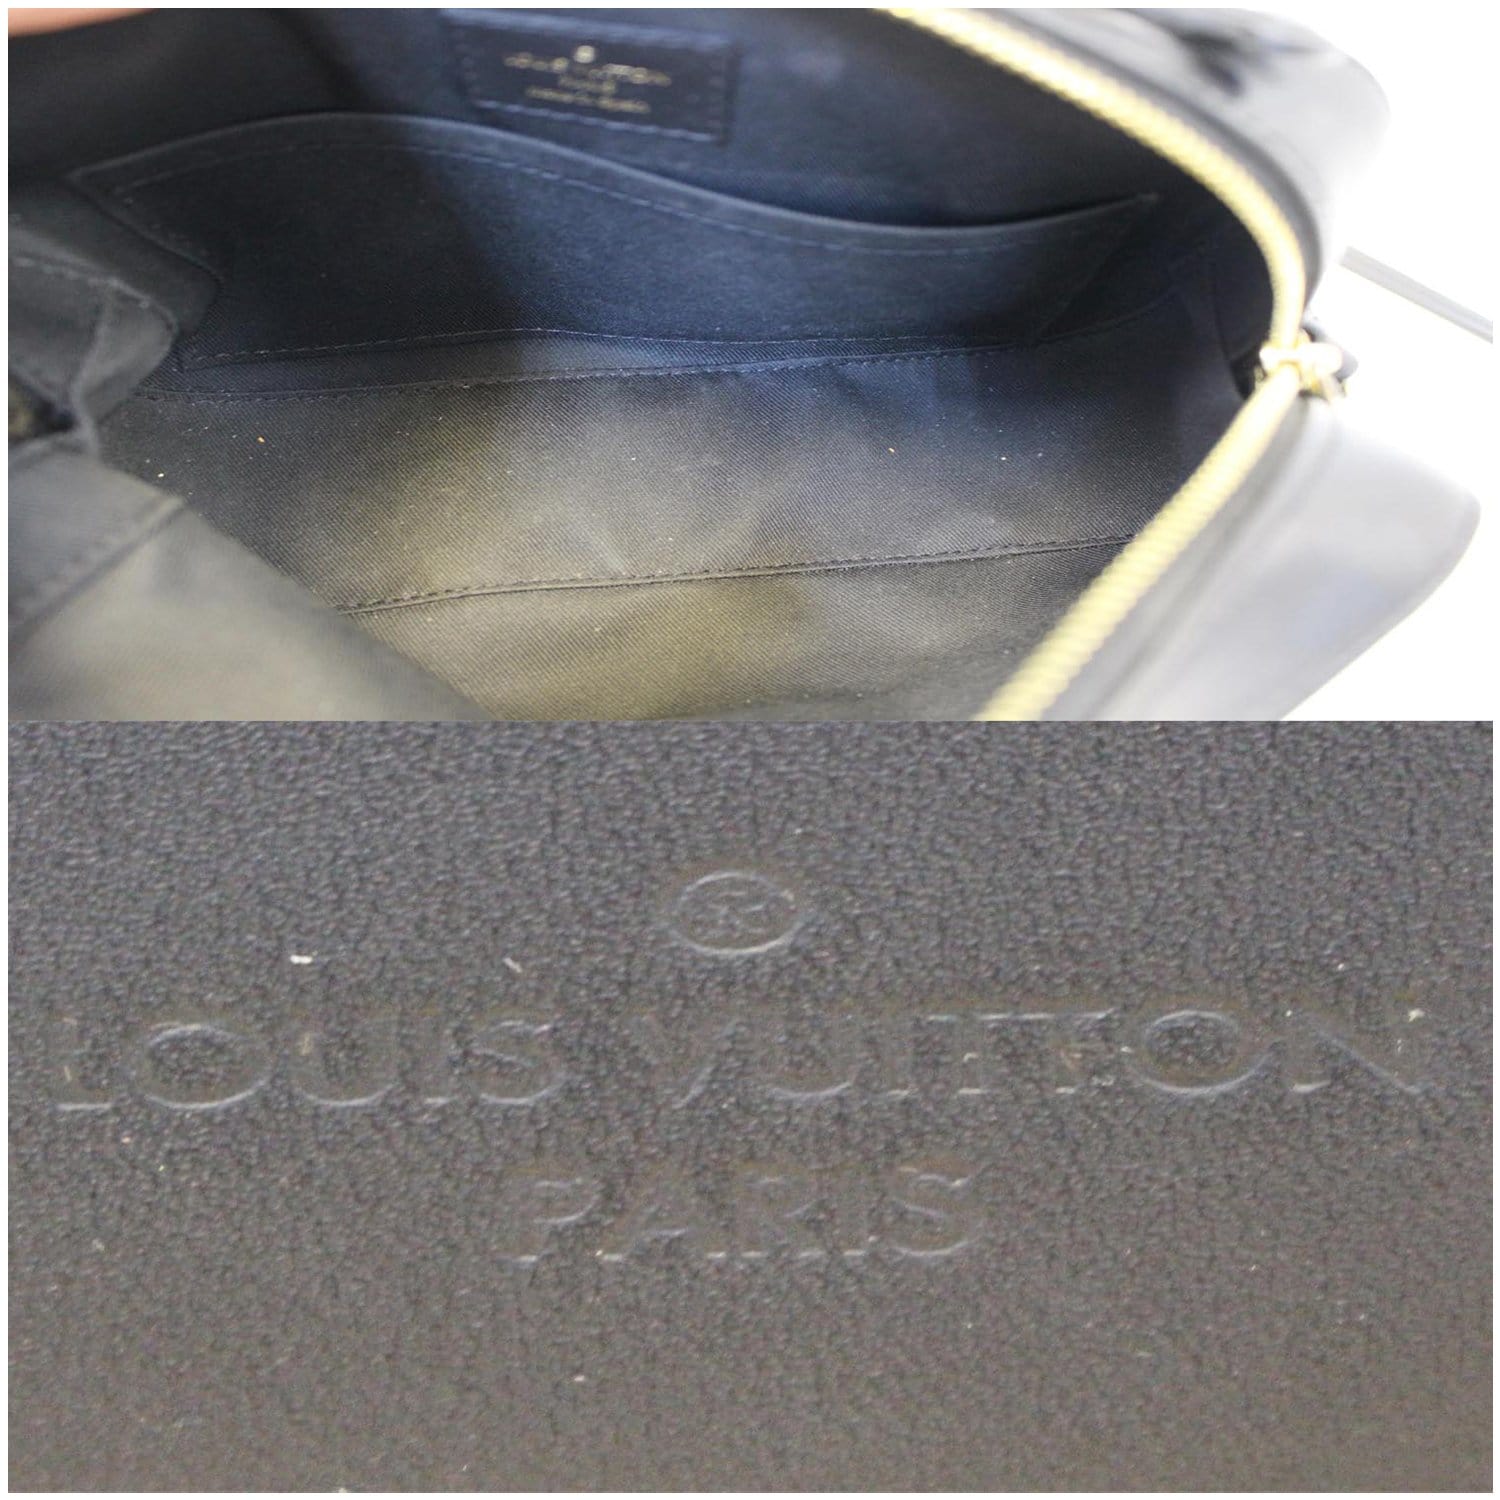 Louis Vuitton Saintonge Handbag Monogram Canvas with Leather Brown 2370011